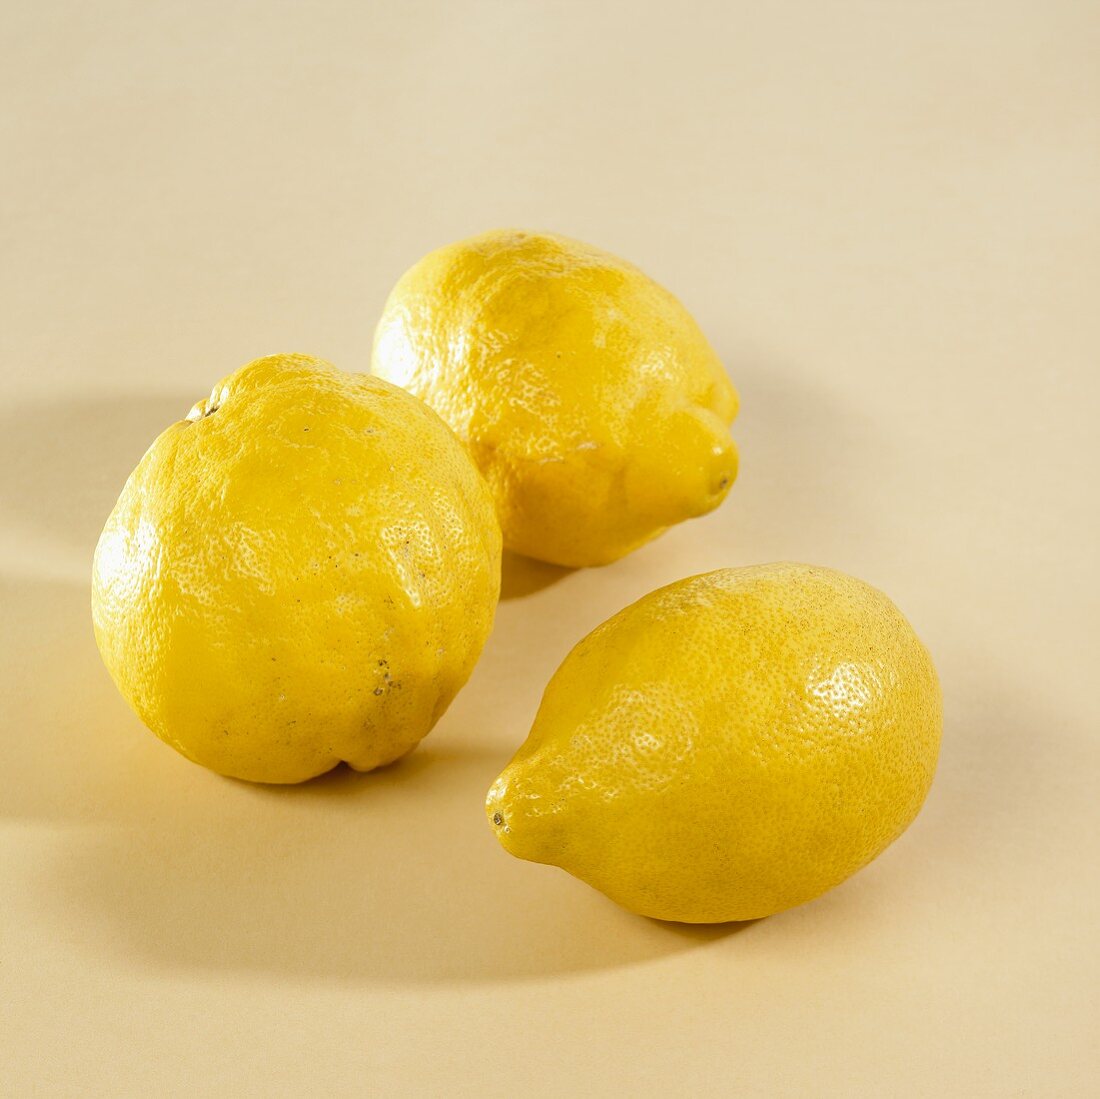 Drei unbehandelte Zitronen